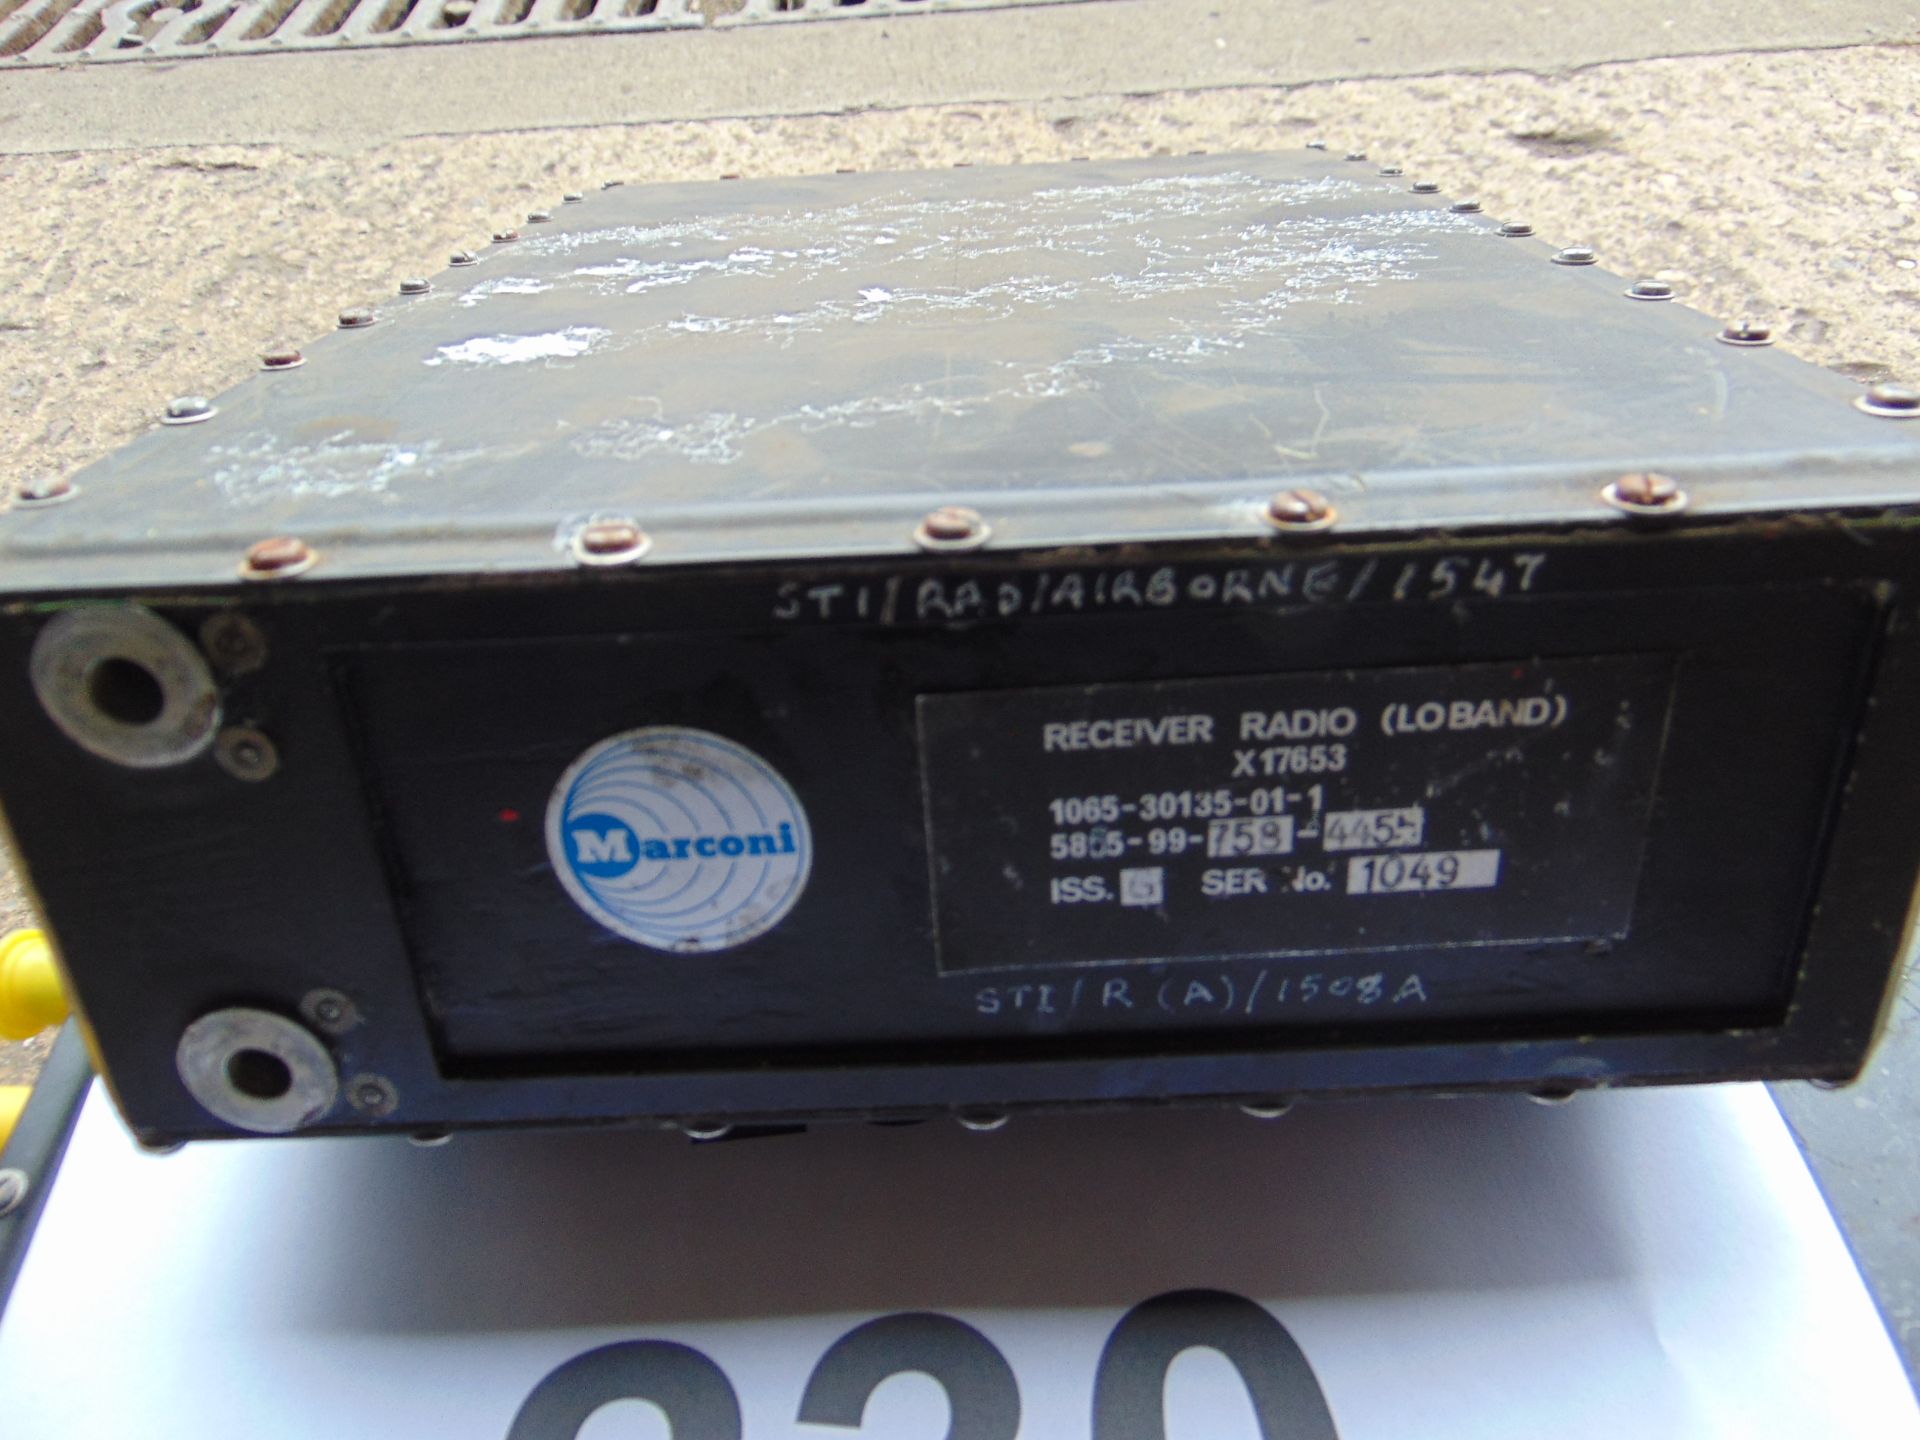 2x Marconi X17653 Receiver Radio Loband - Image 2 of 3